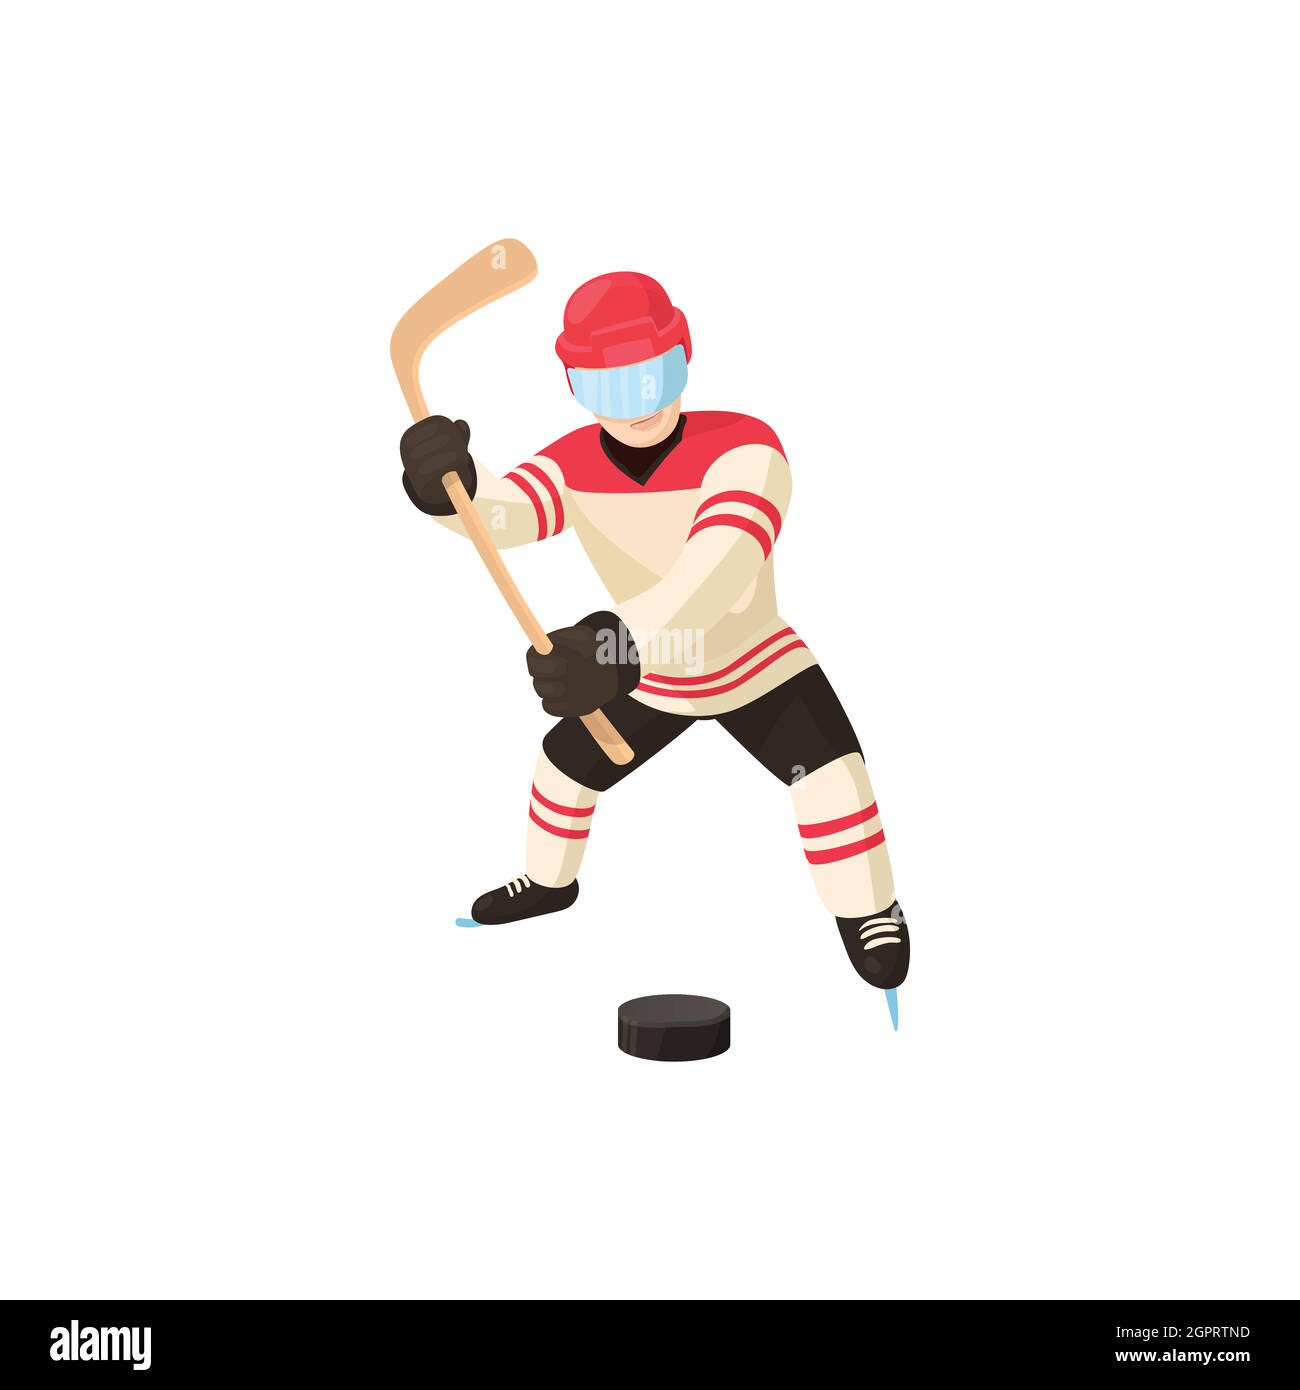 Hockey player icon, cartoon style Stock Vector